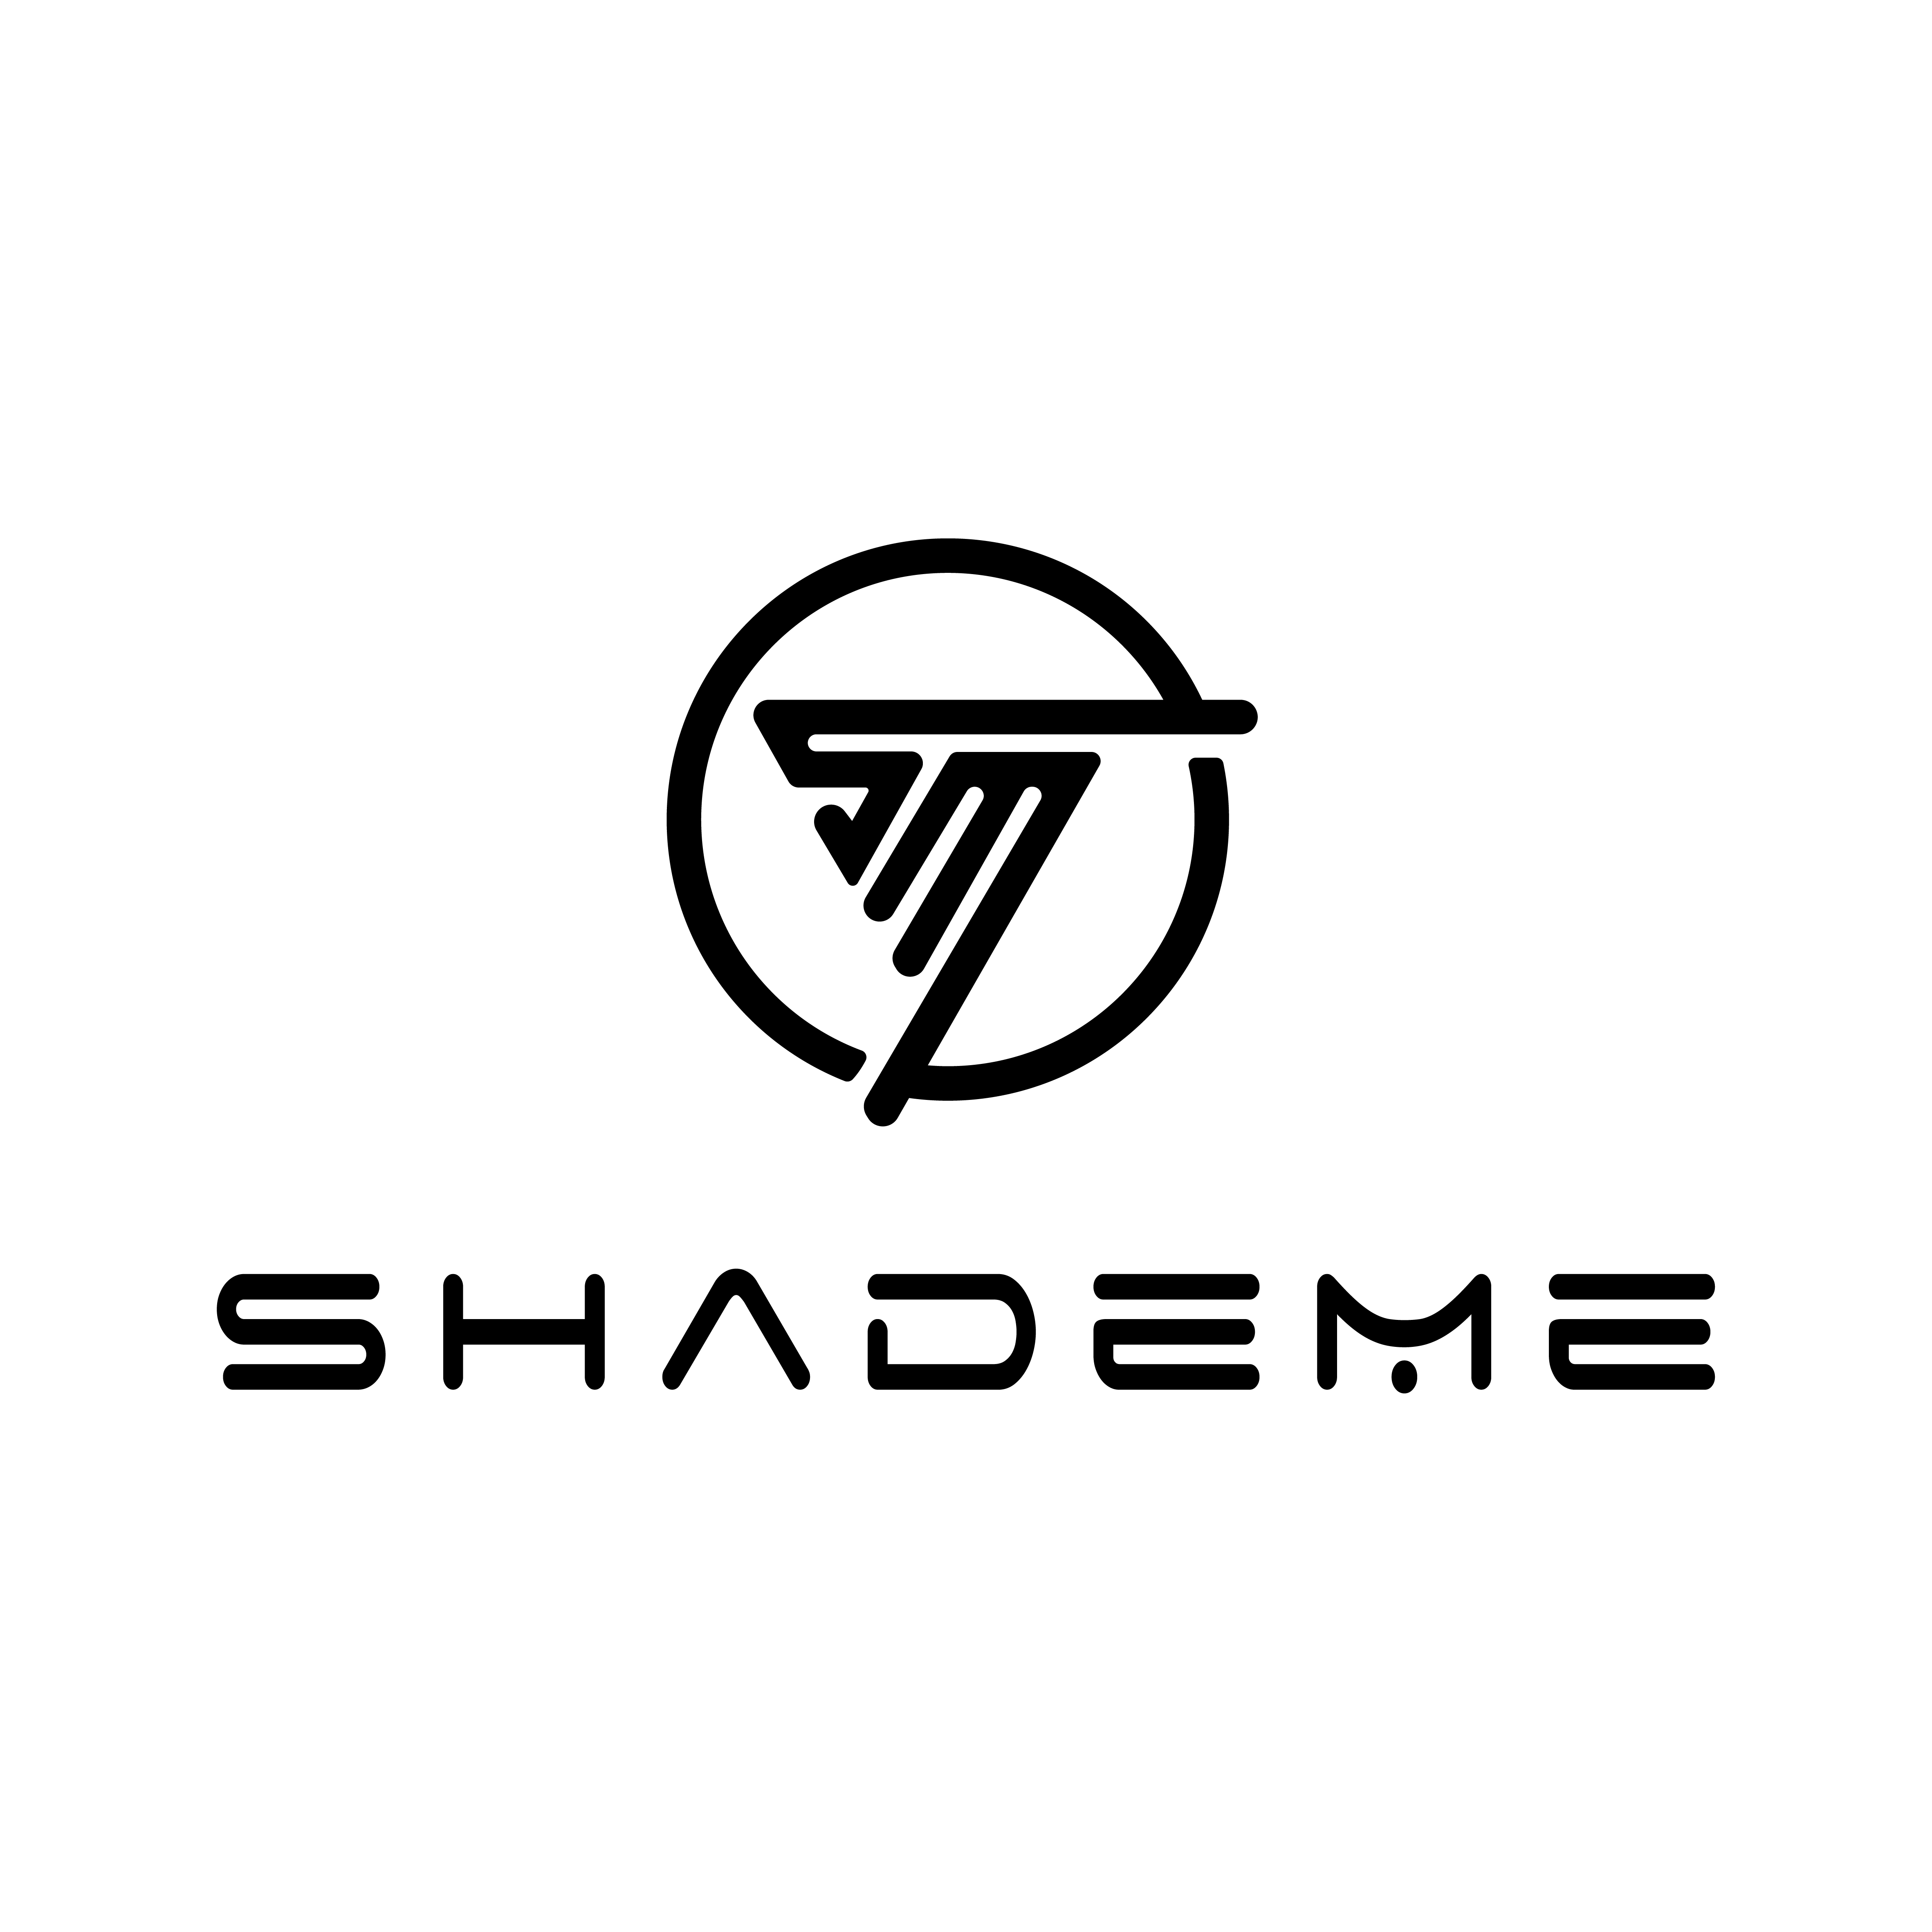 ShadeMe